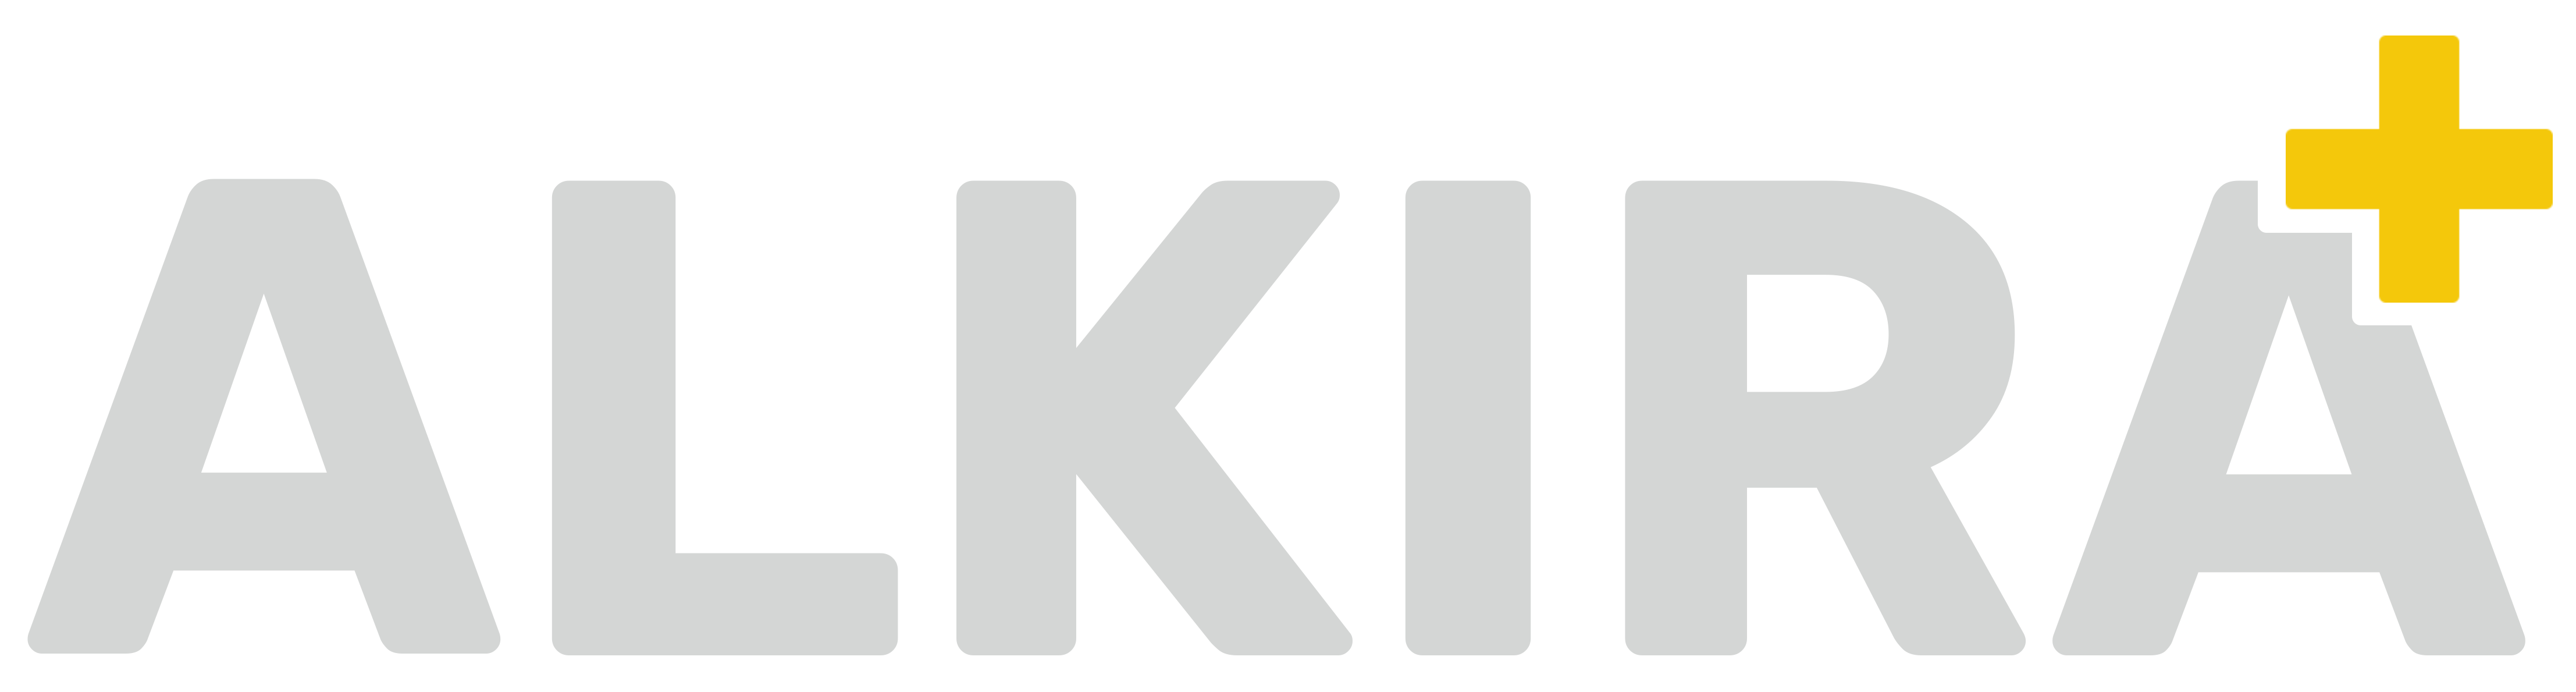 Alkira white logo